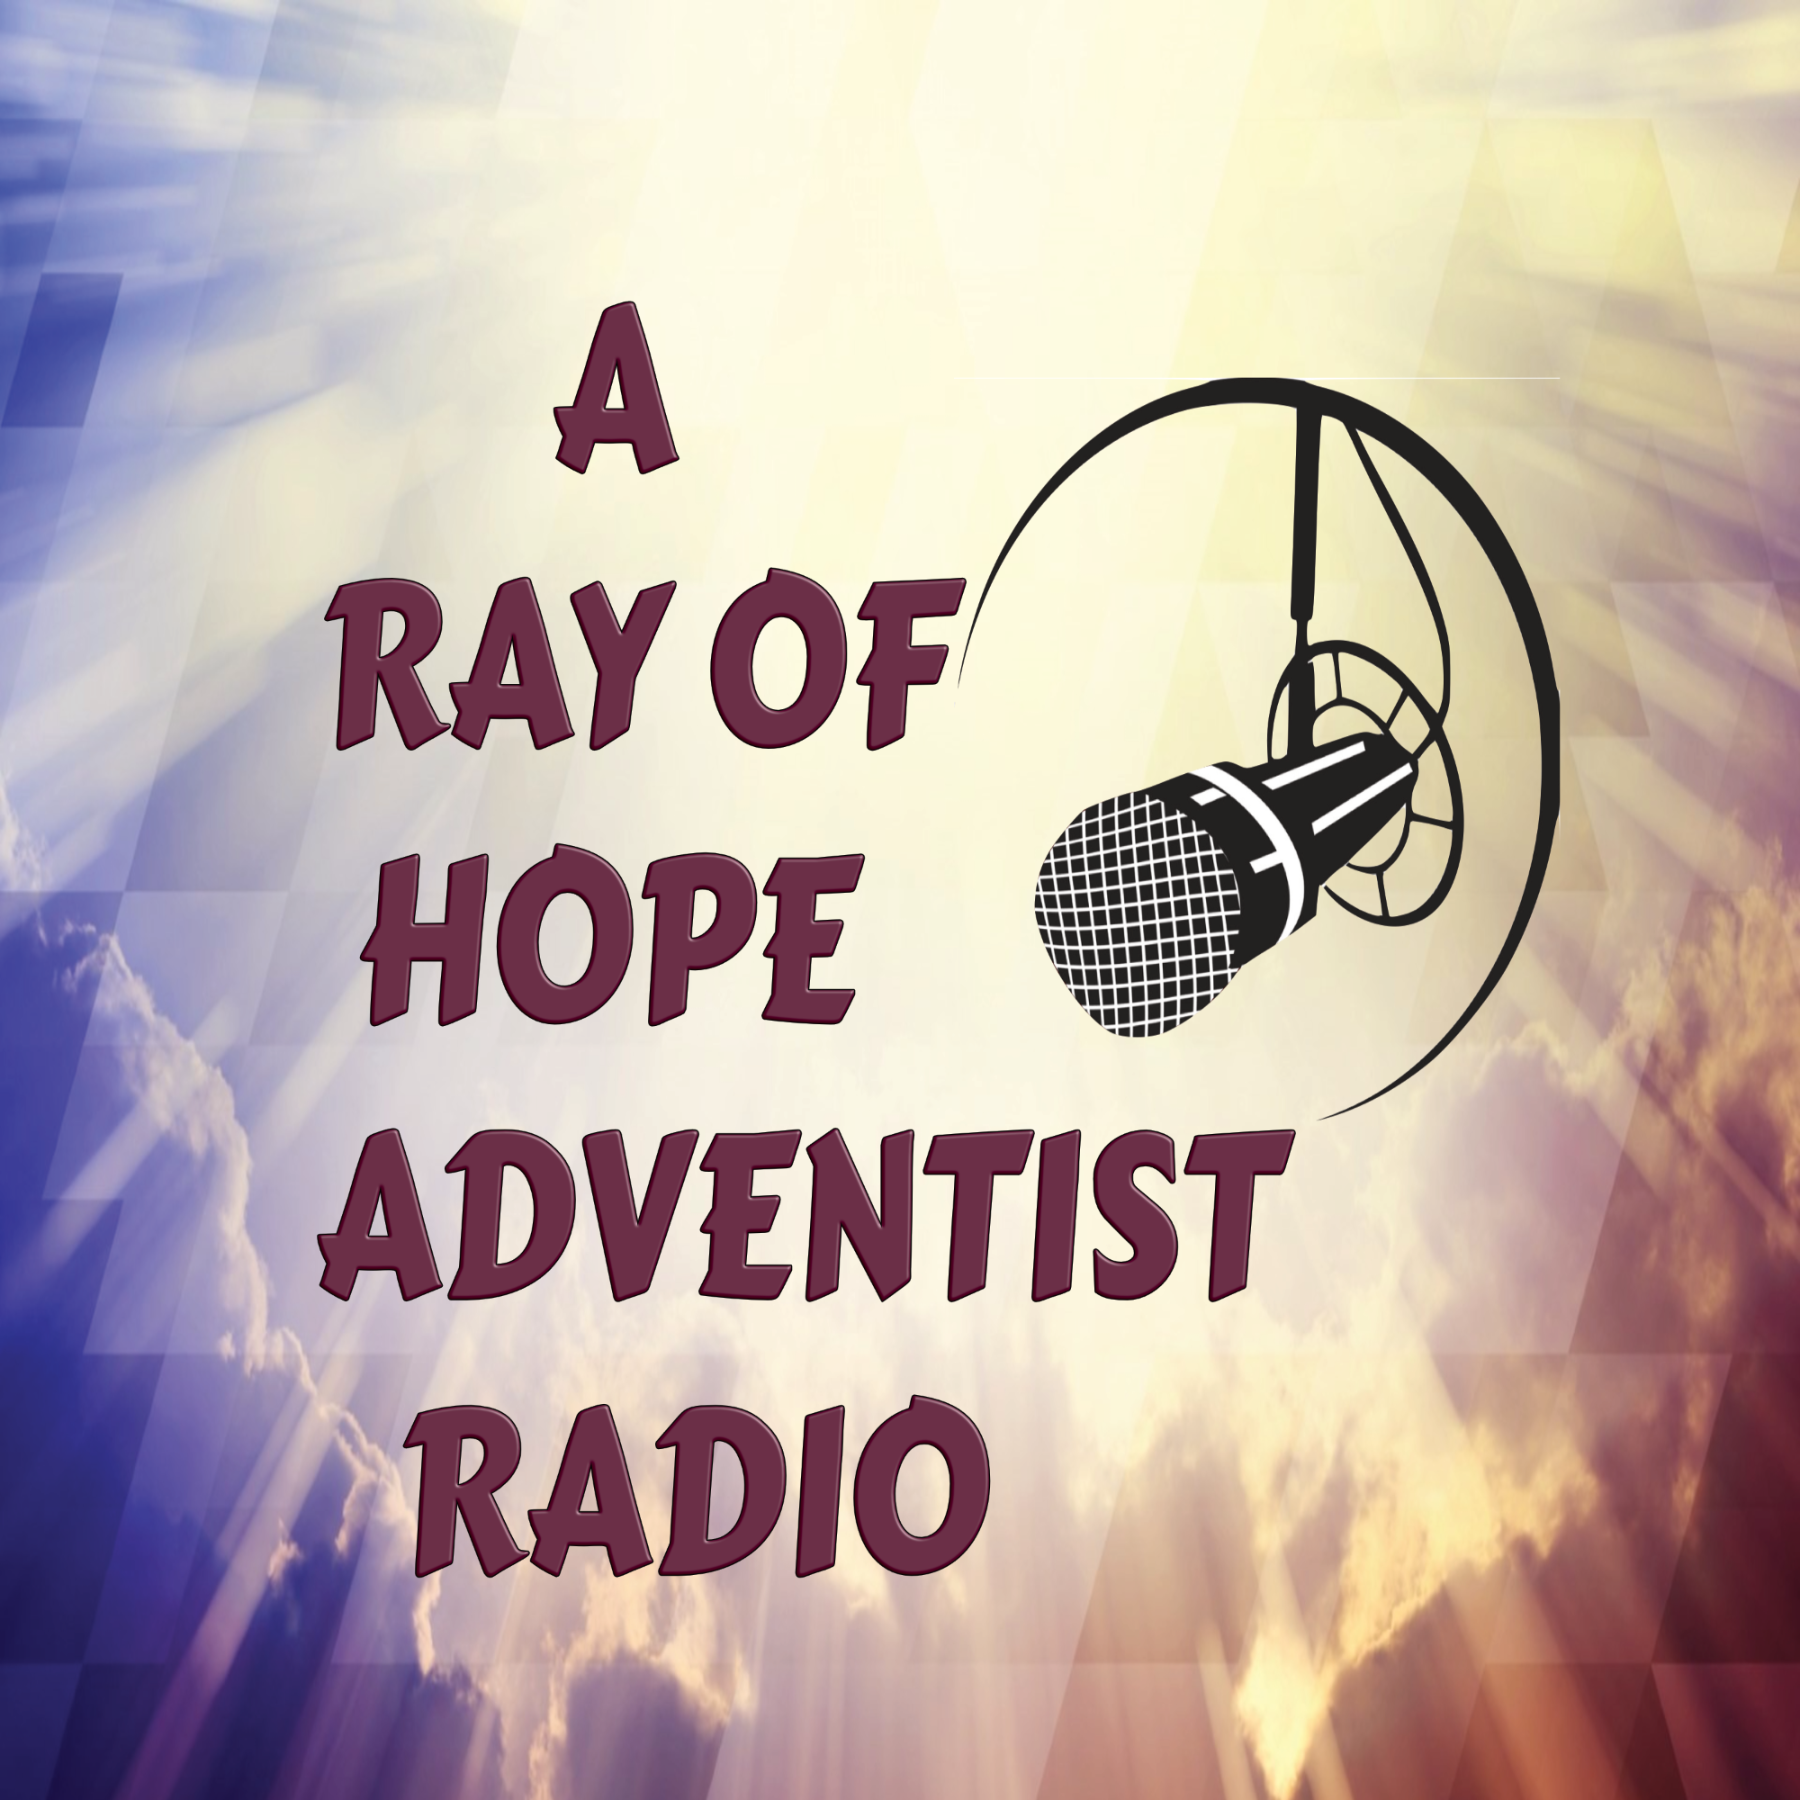 A Ray of Hope Adventist Radio